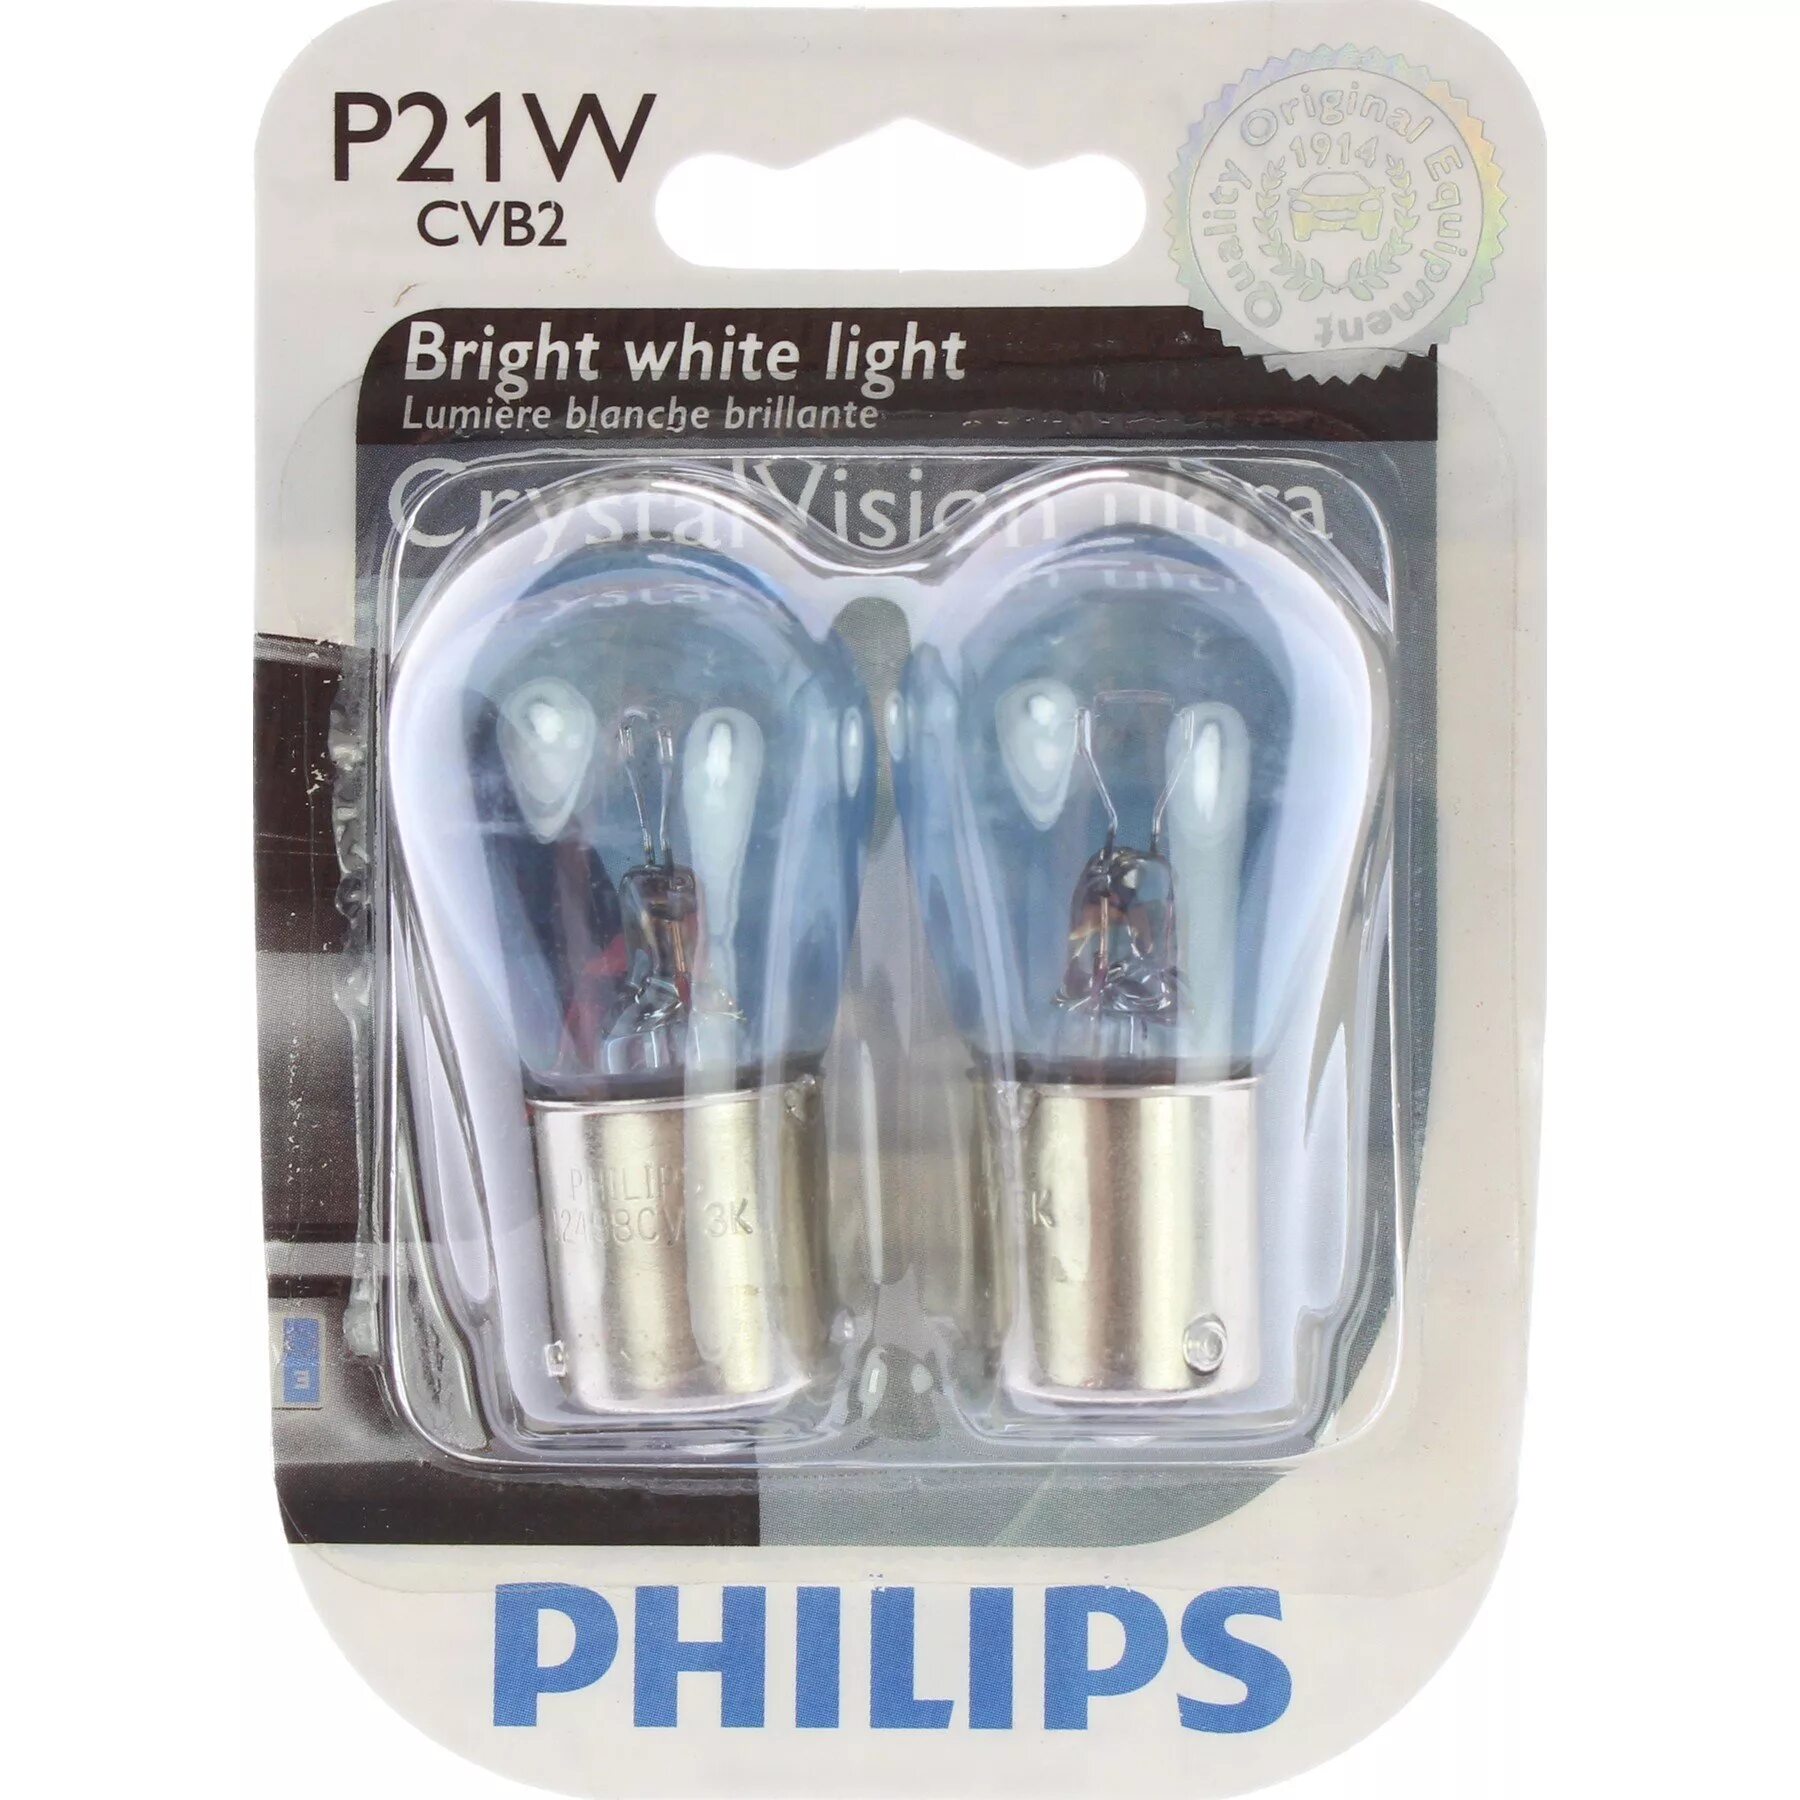 Филипс 21. Philips Crystal Vision Ultra Light p21w. P21w светодиодная Philips белый свет. Лампы Philips Crystal Vision p21w. Philips 12498cvb2 p21w CRYSTALVISION Ultra Miniature Bulb.